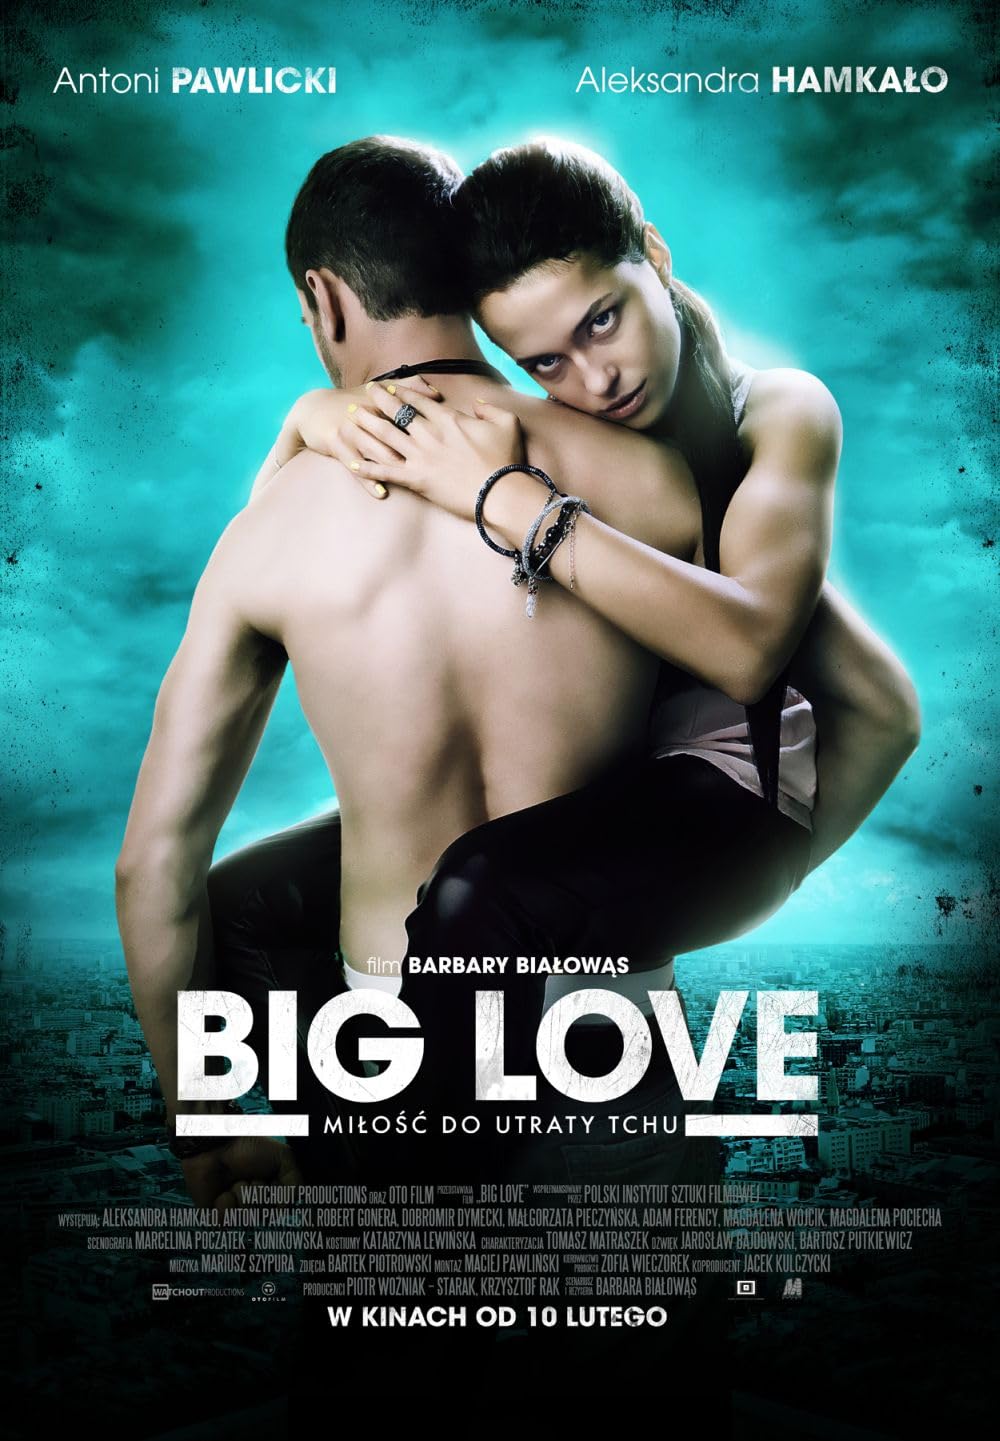 Big Love (2012) 480p HDRip Polish Adult Movie [330MB]